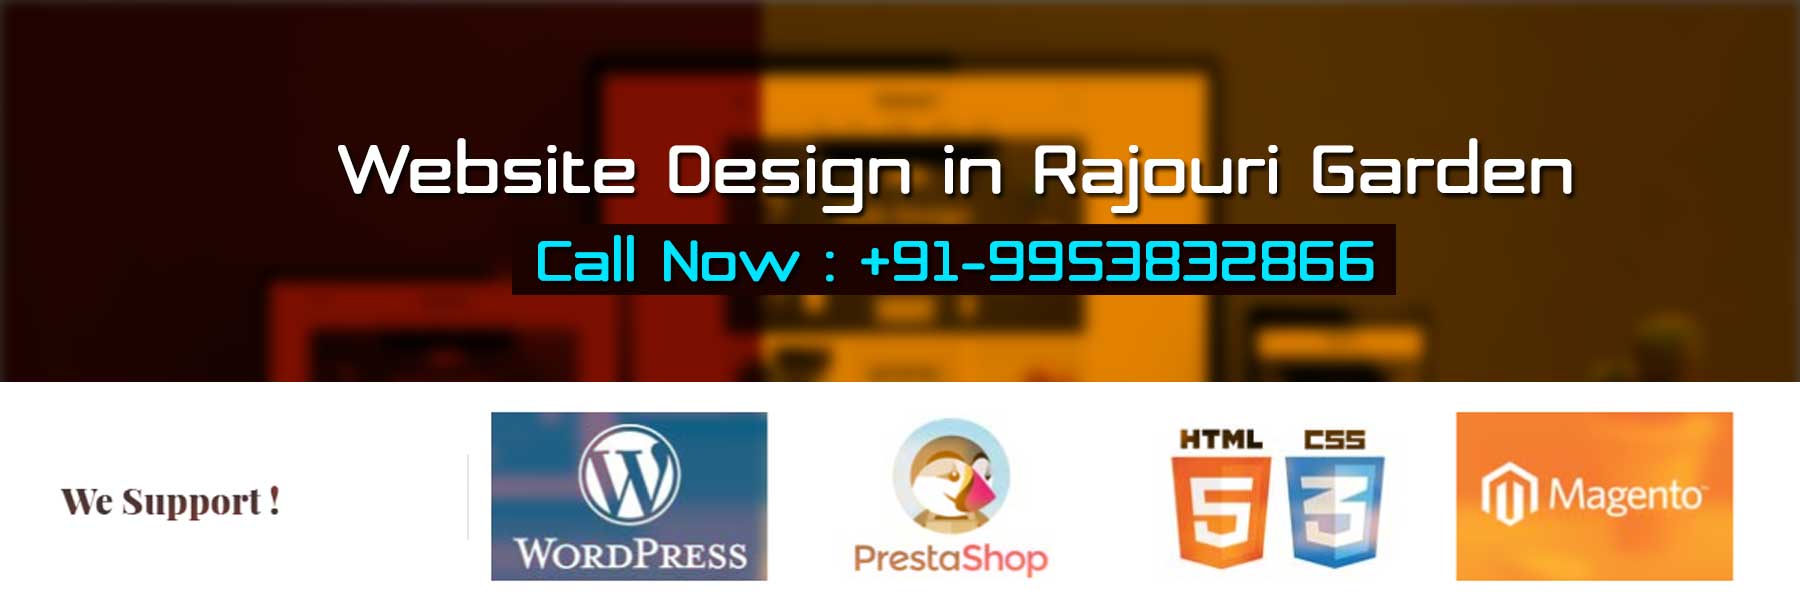 Website Design in Rajouri Garden